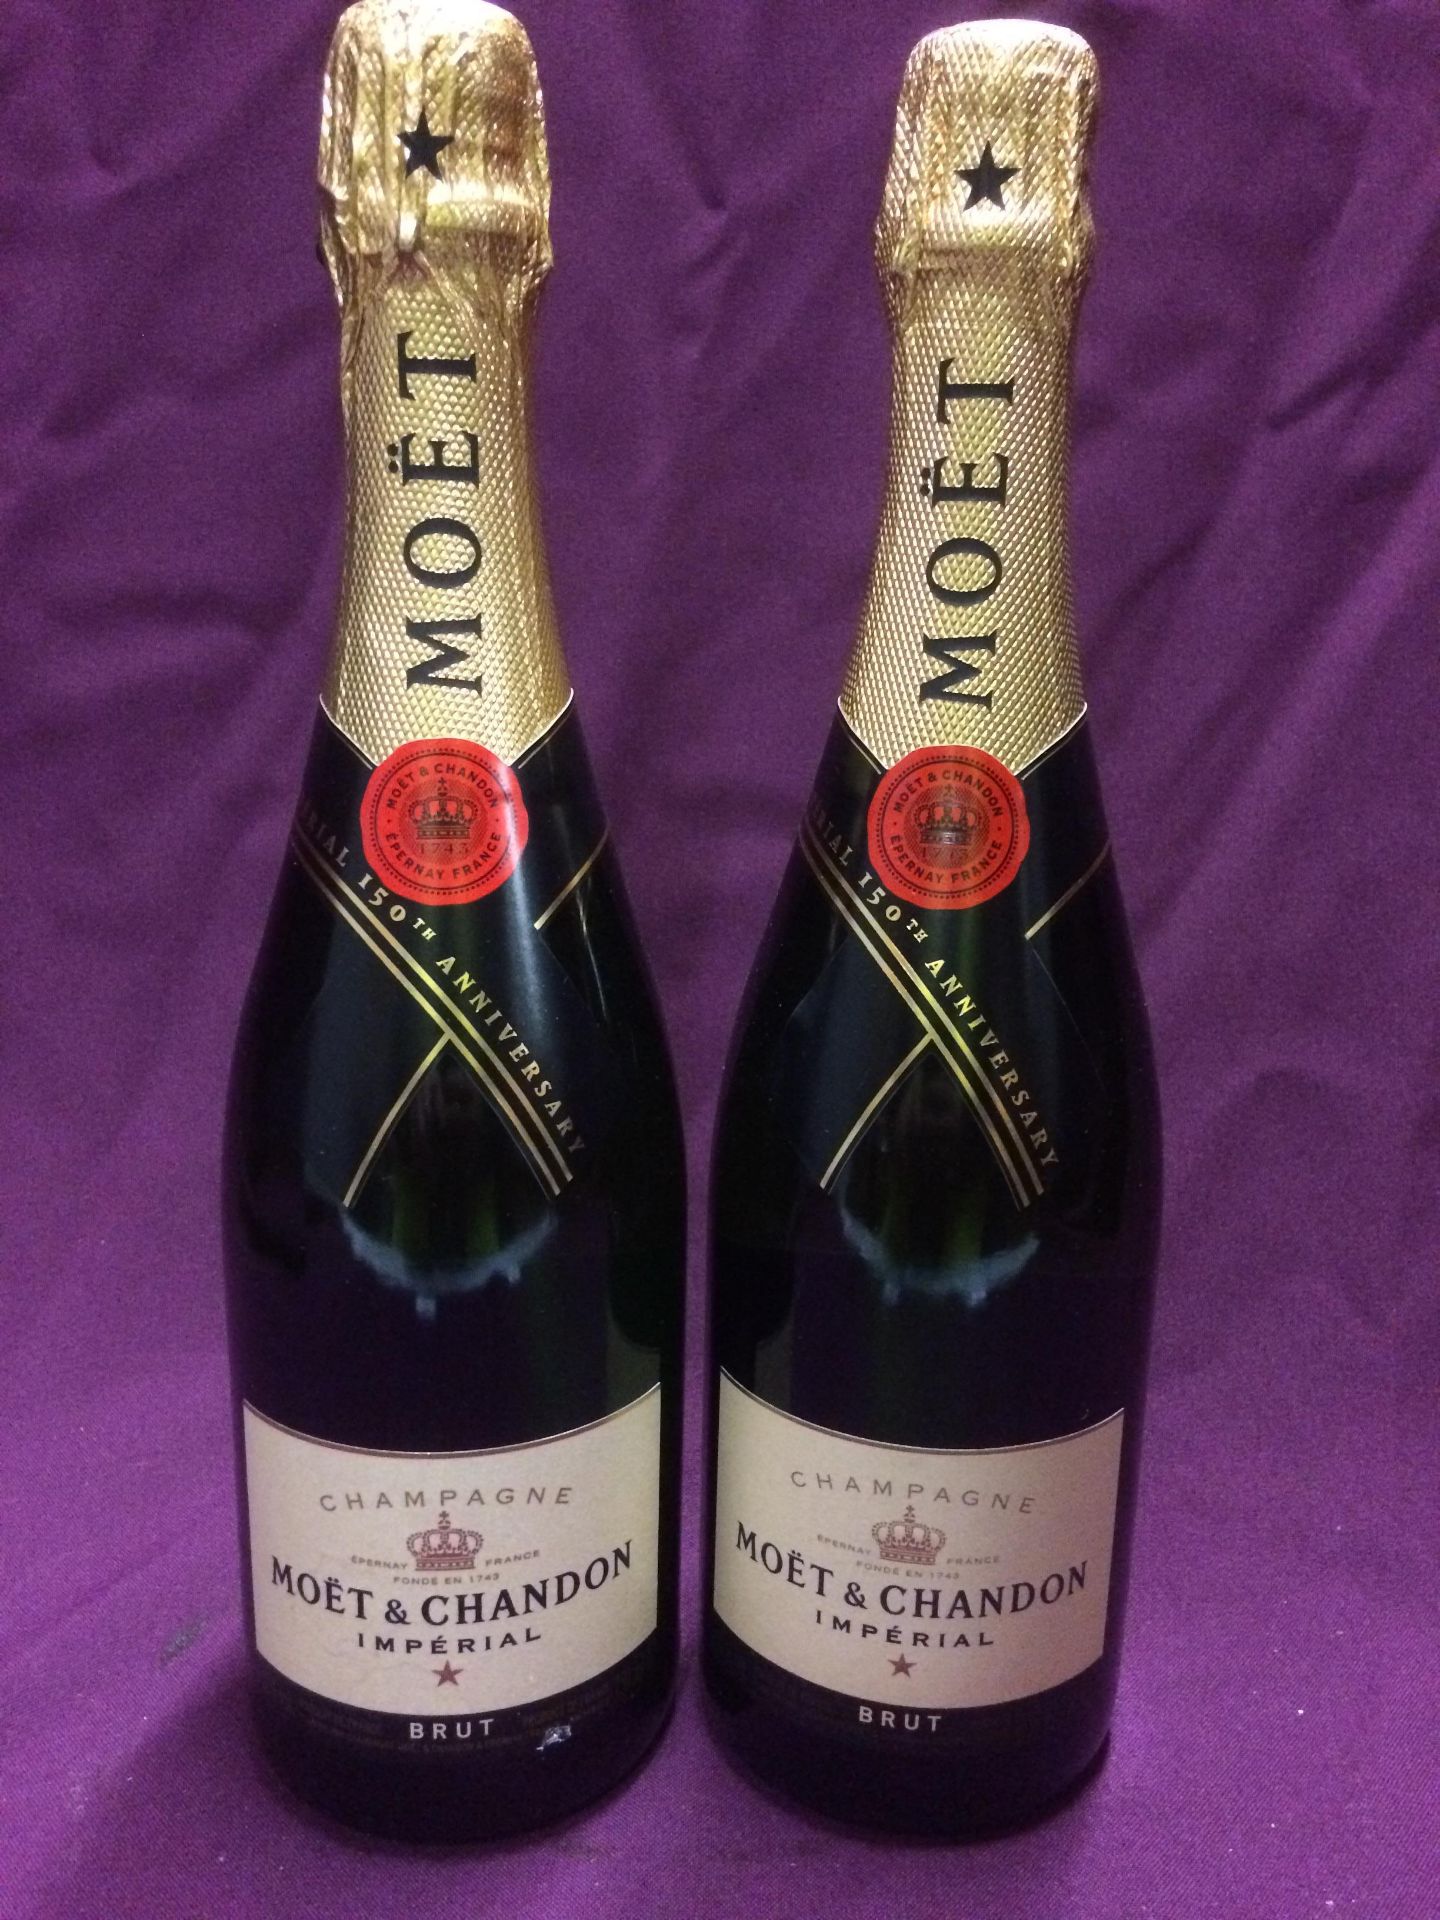 2 x 750ml bottles of Moët & Chandon Imperial champagne